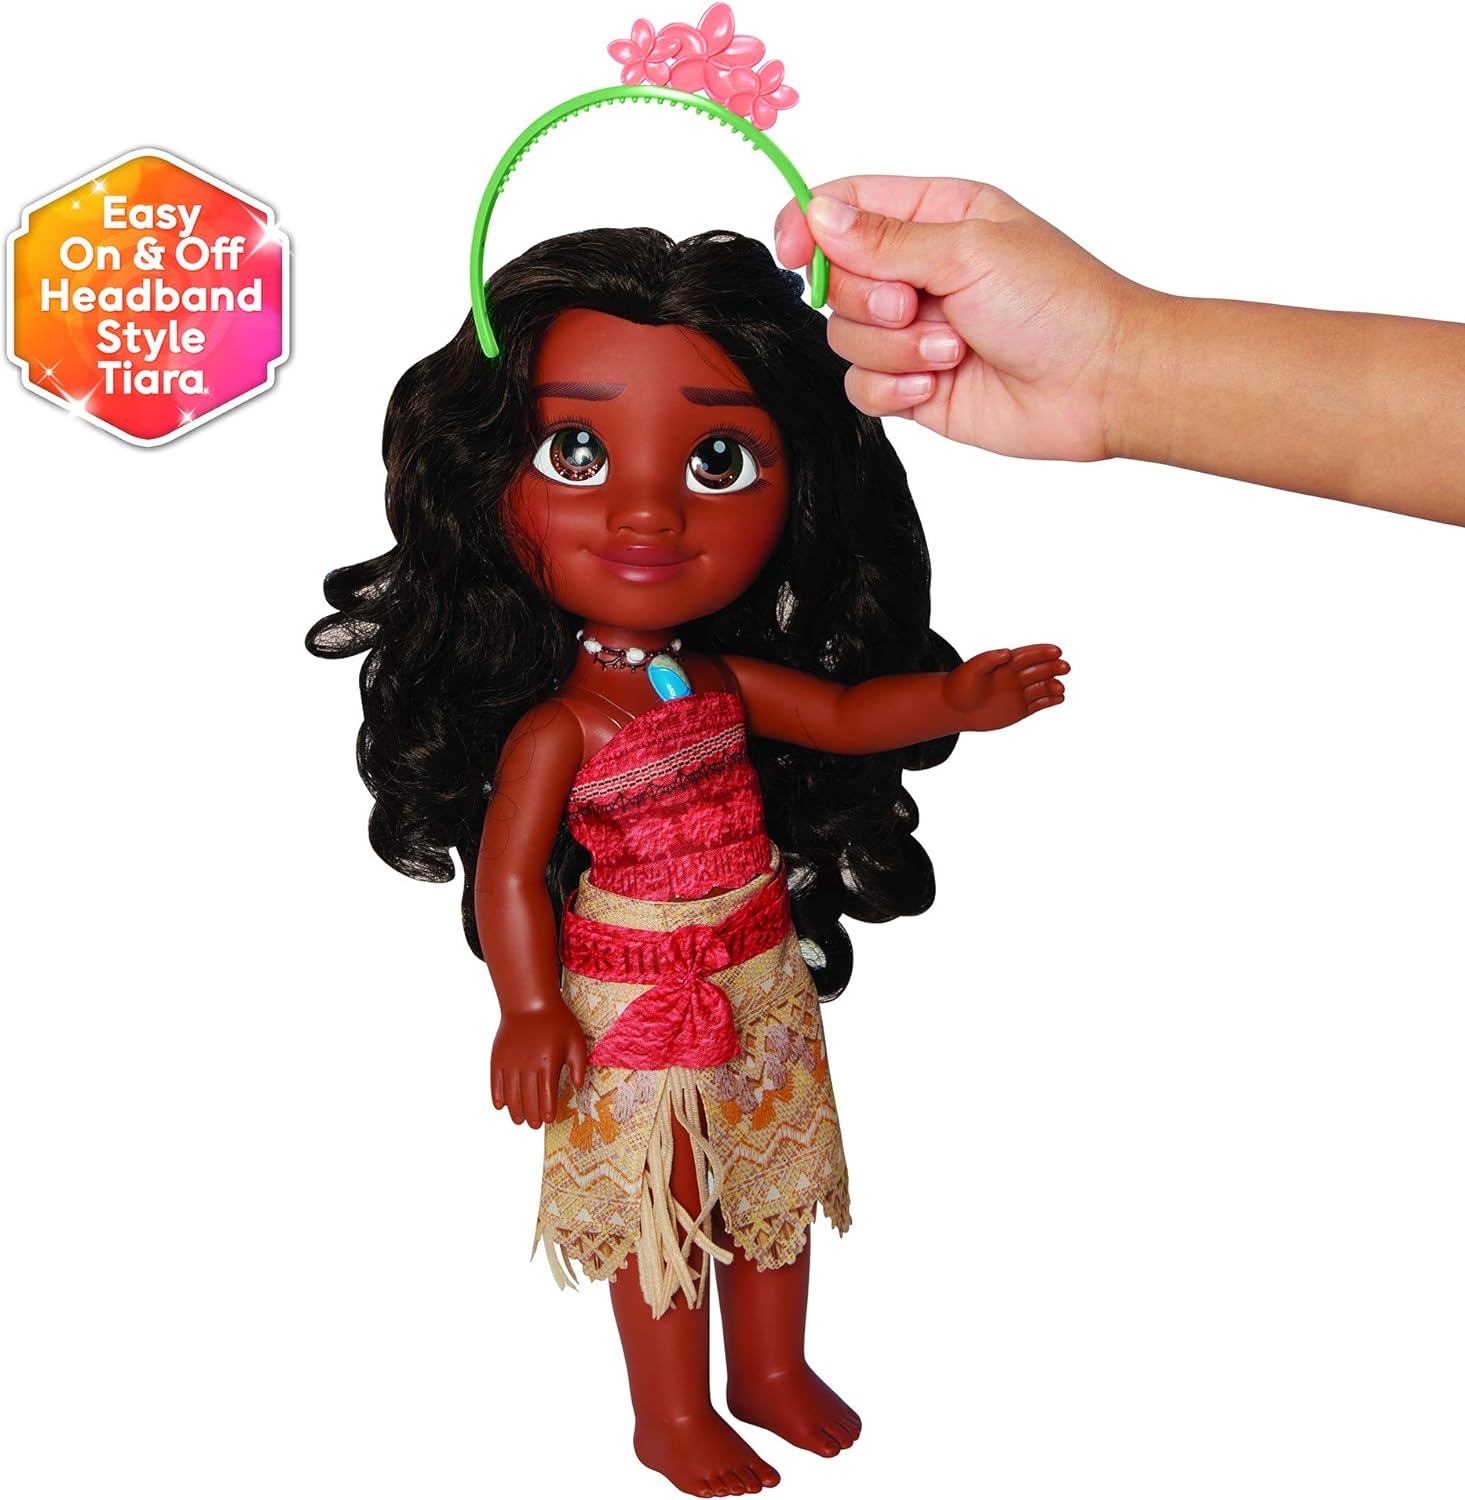 Disney Princess My Friend Moana Toddler Doll 14 inch